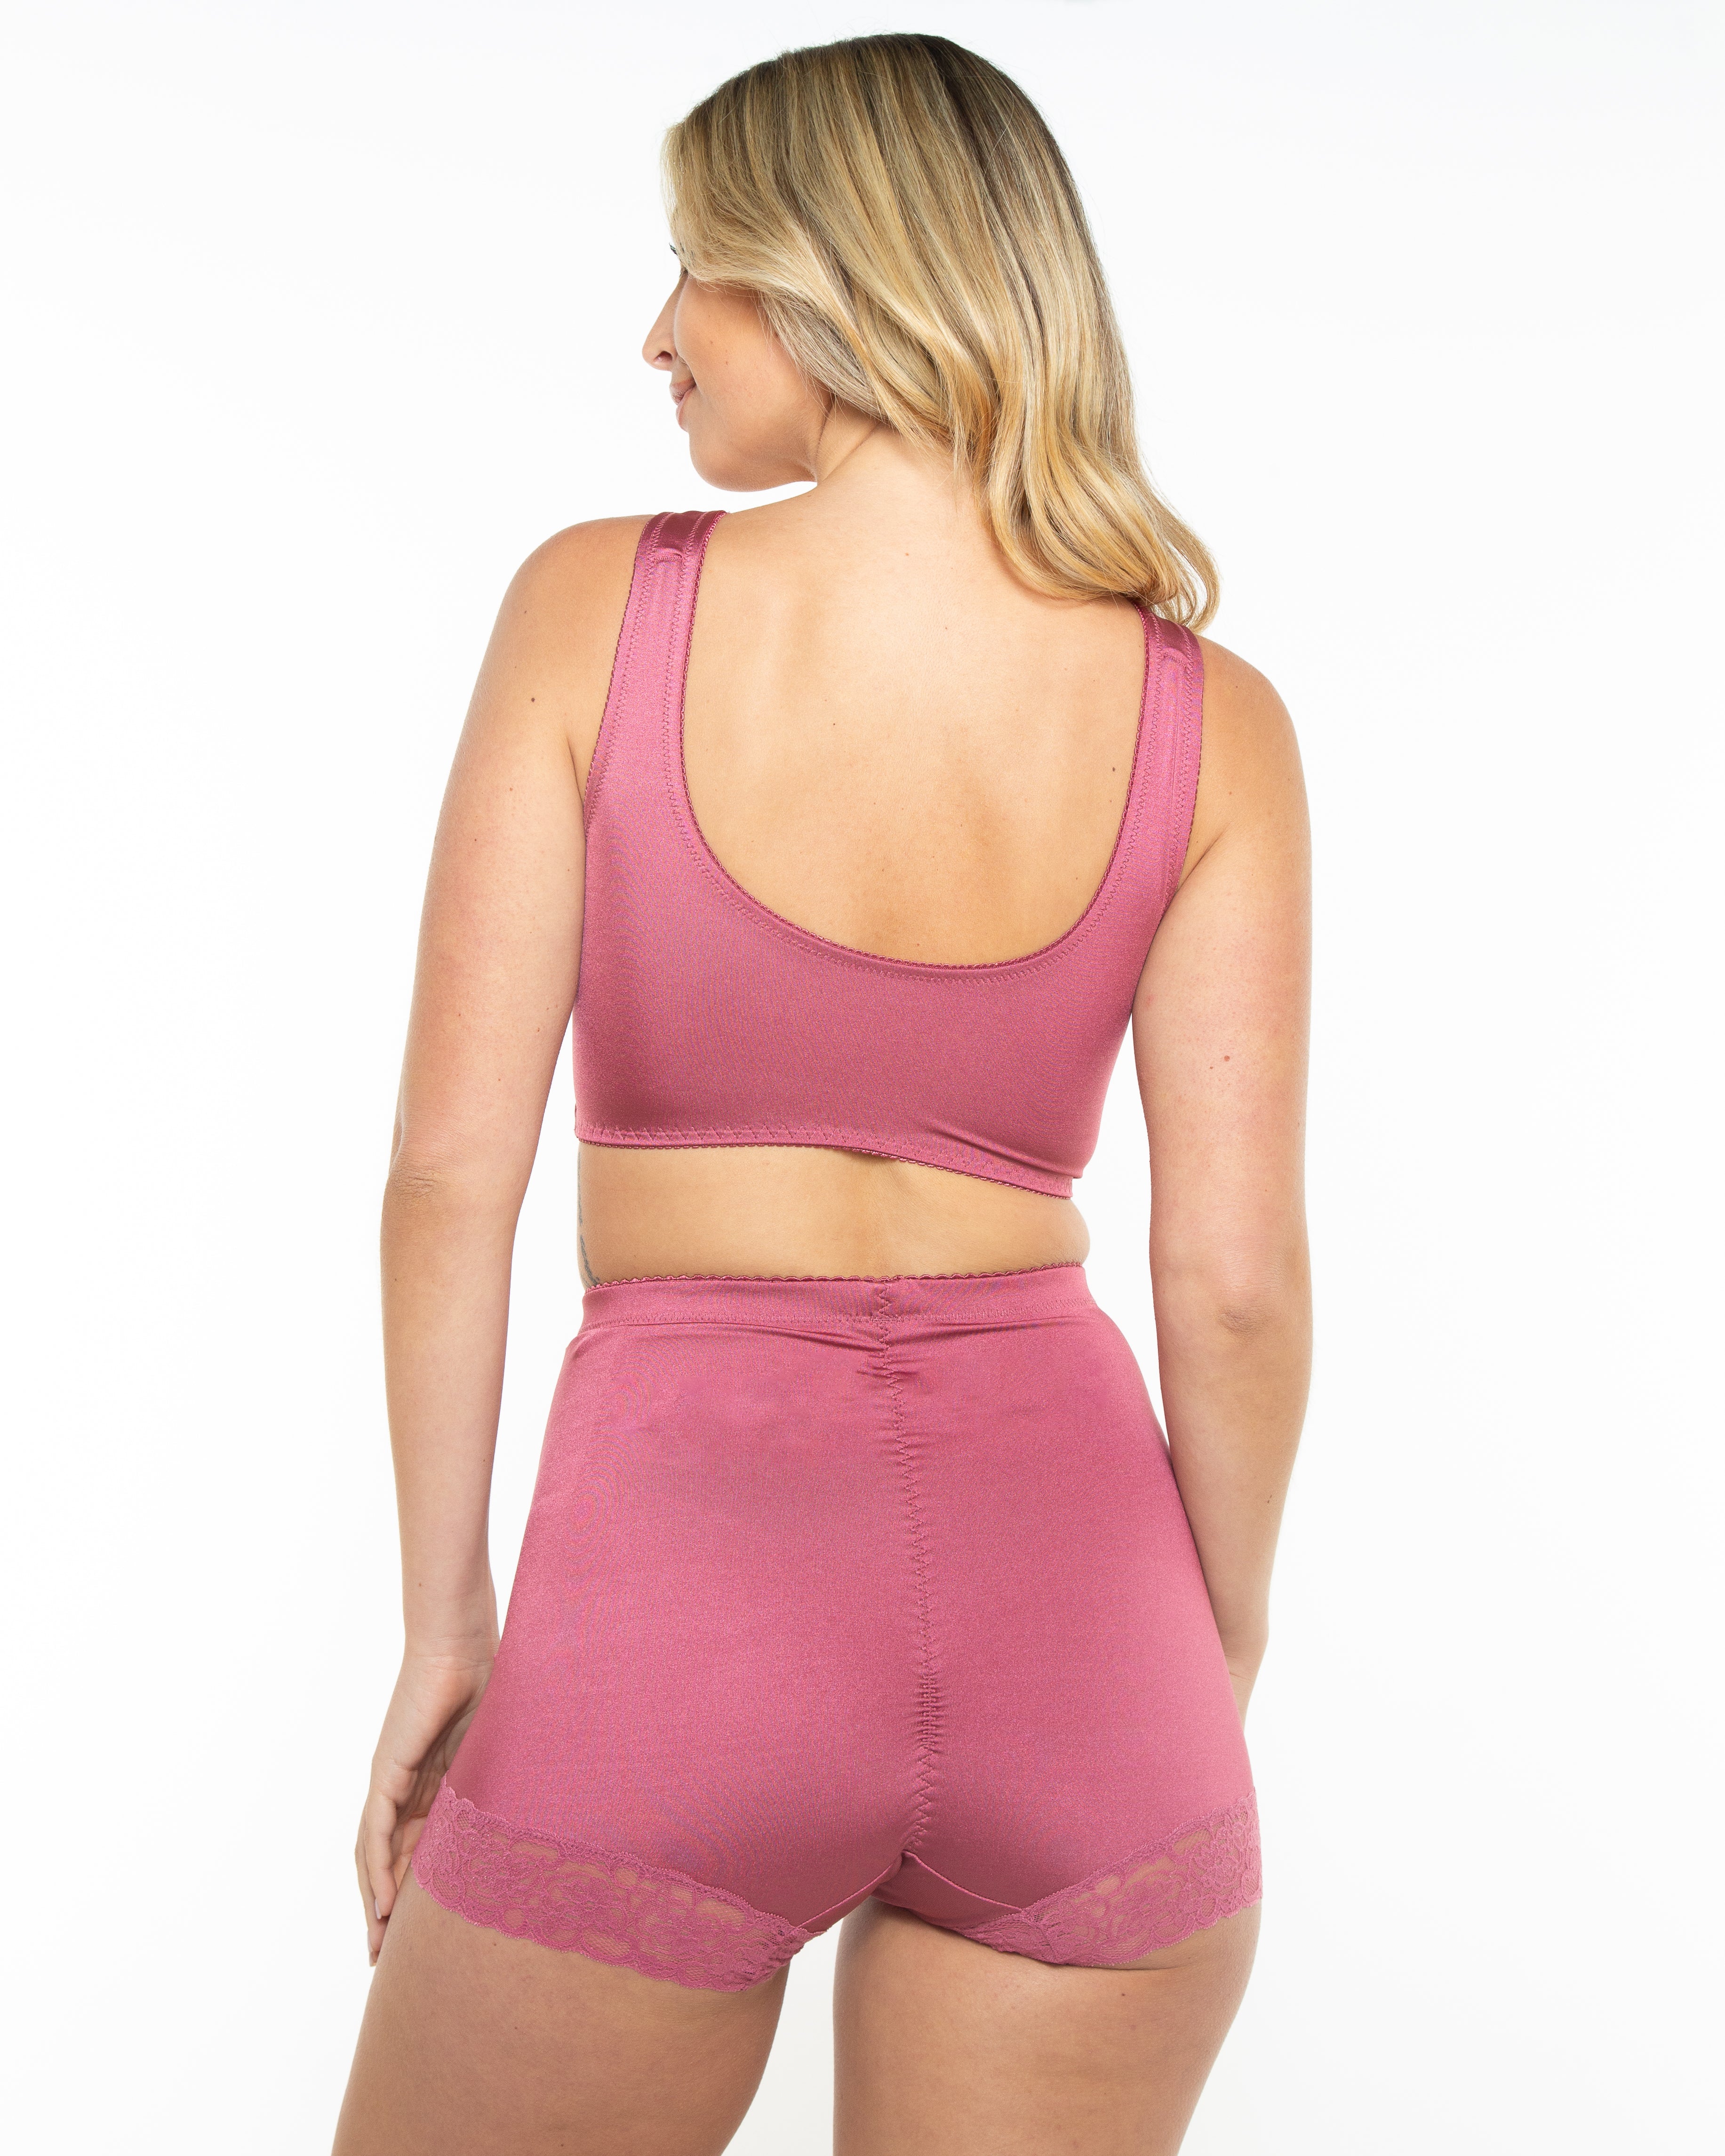 Rhonda Shear Control Underwear Women's New Comfy Panties Rose Pink Size  Medium